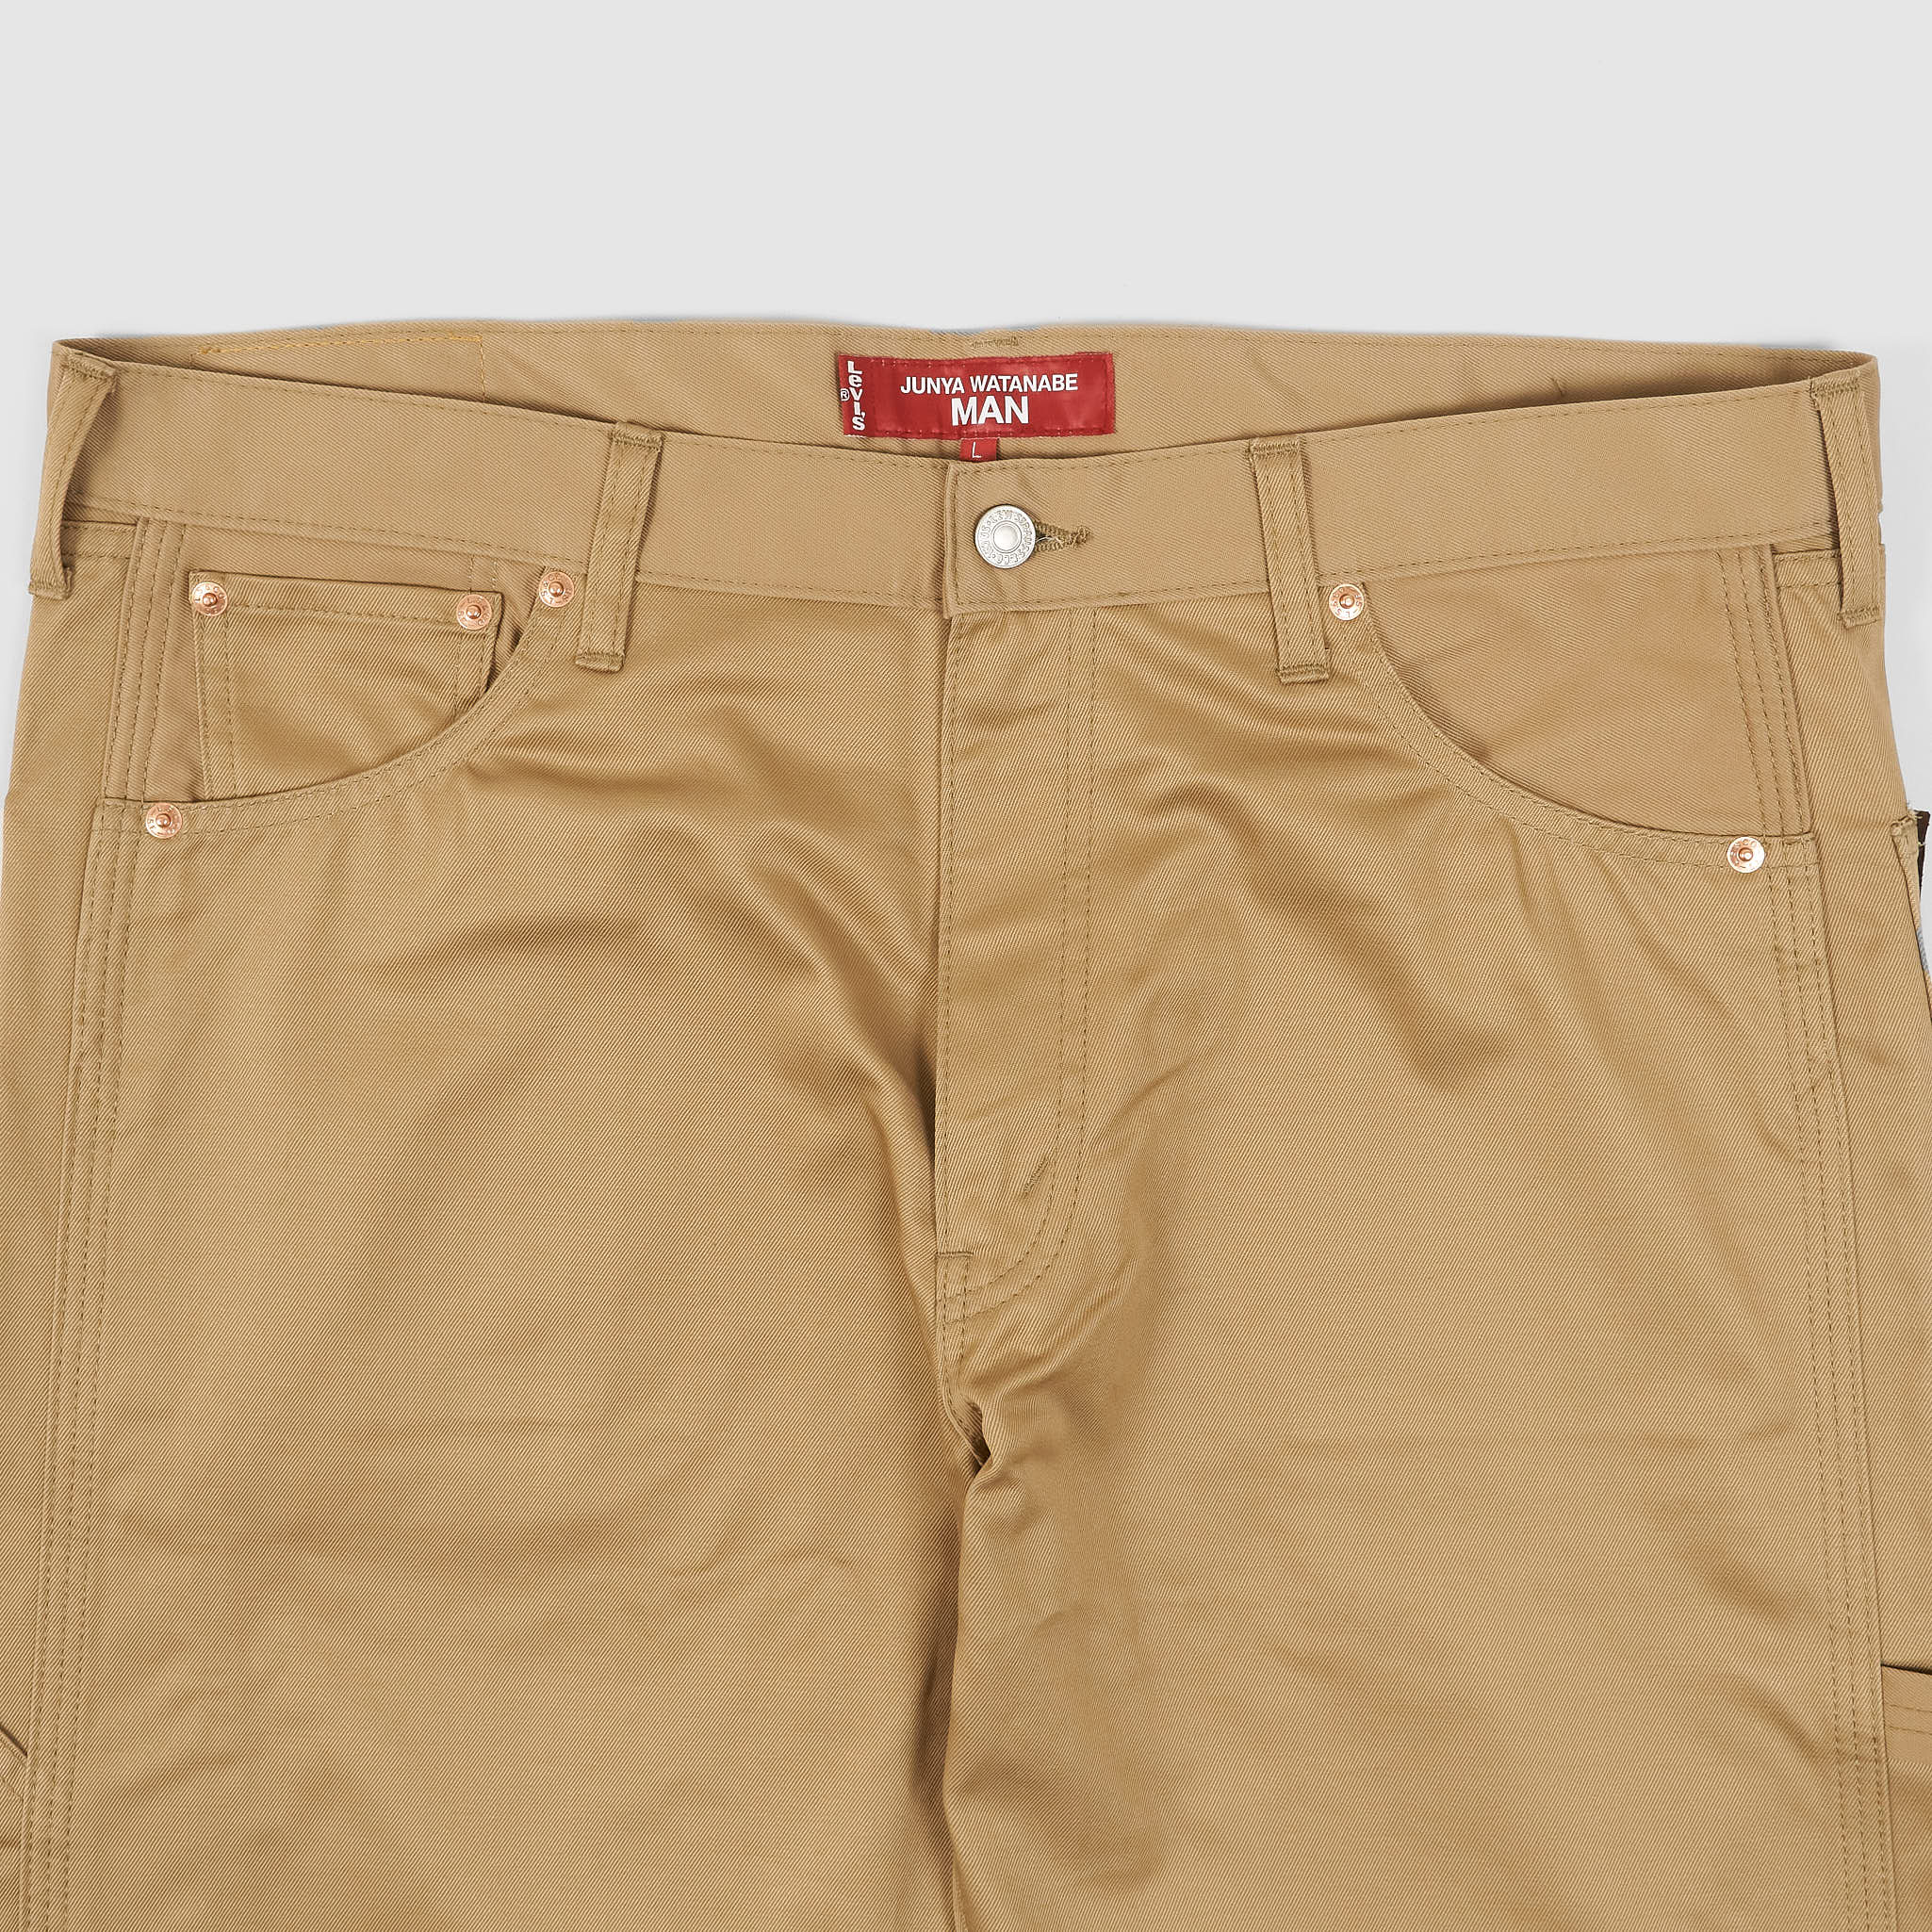 Junya Watanabe Man x Levi's® 5-Pocket Work Pants - DeeCee style